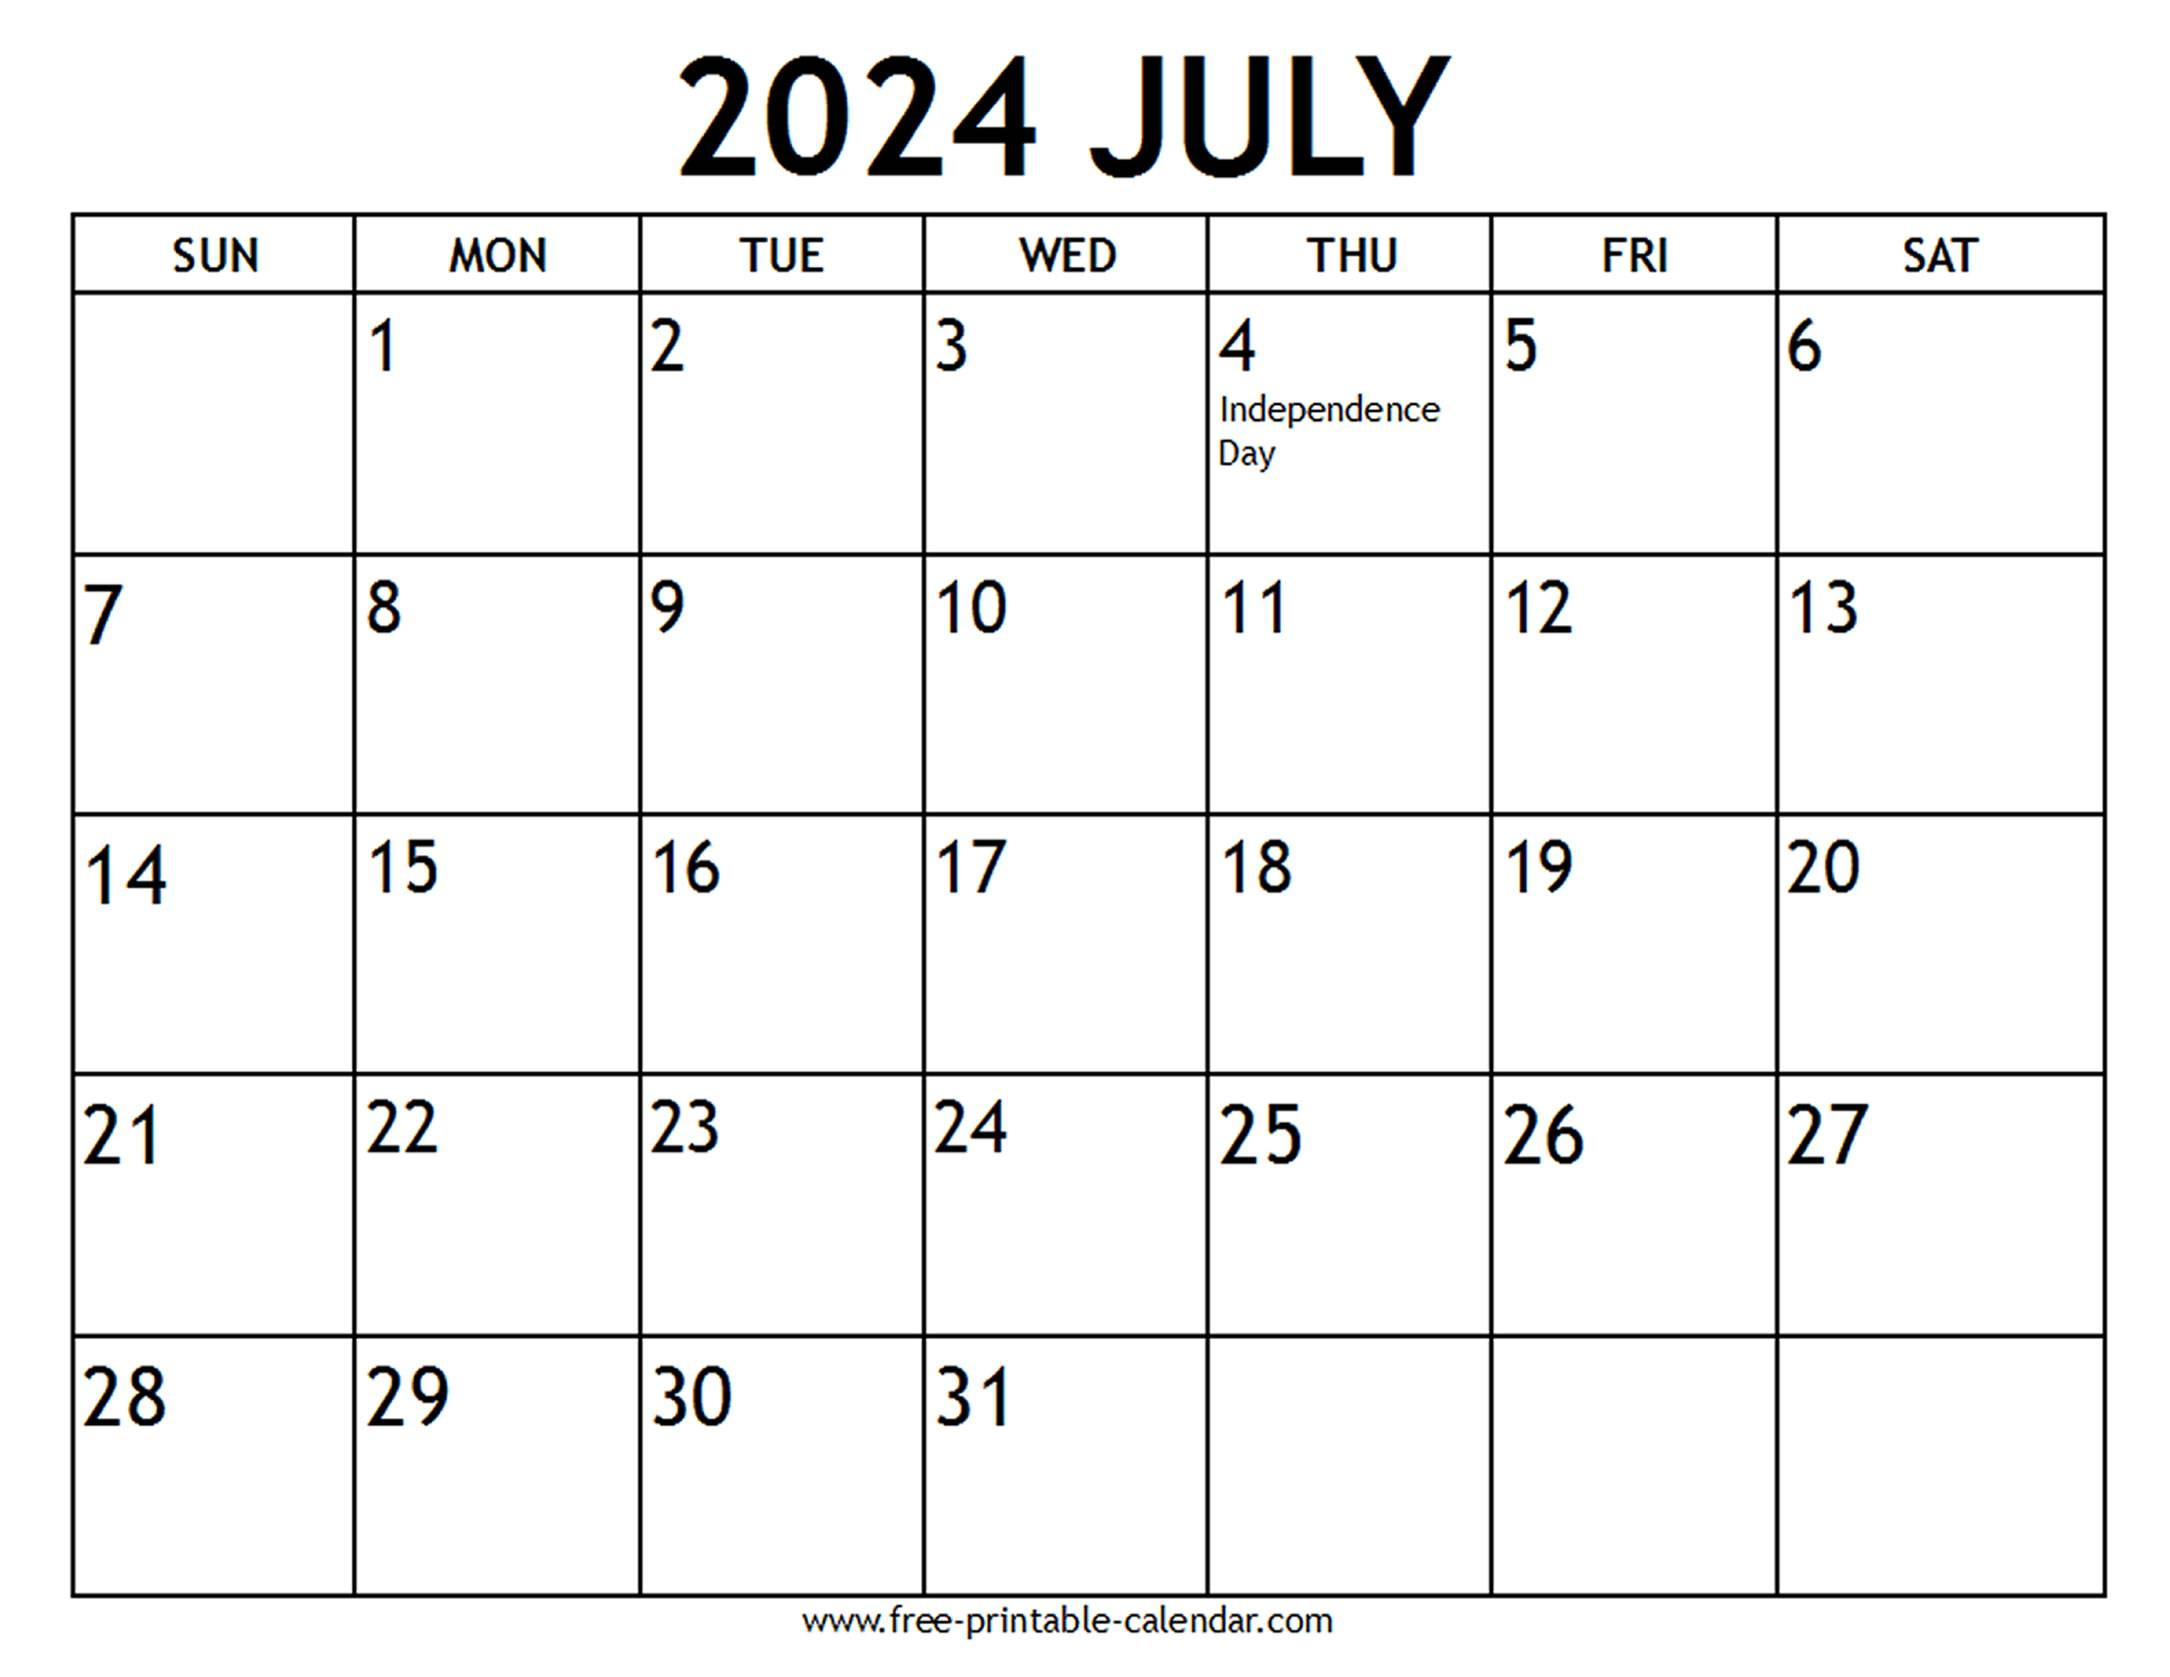 July 2024 Calendar Us Holidays - Free-Printable-Calendar | Holiday Calendar 2024 July